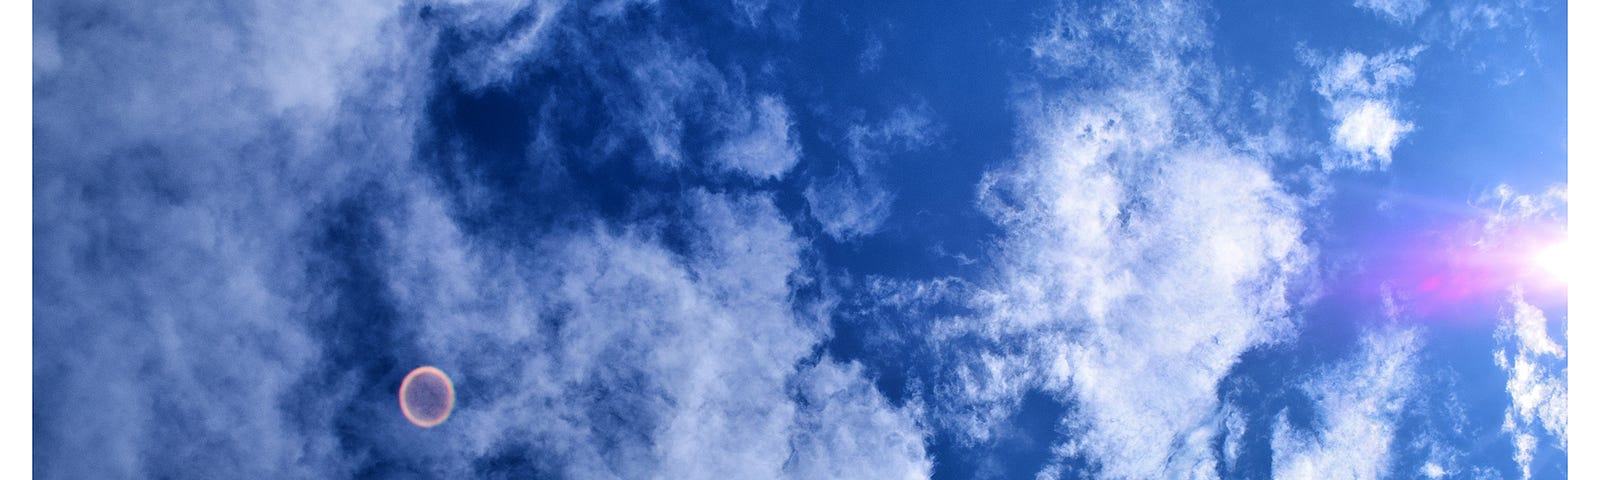 Title Aesthetic nature clouds (5)
 Cloud Photography
 Contemporary Cloud Photography By Visual Contemporary Fine Artist Photographer Robert Ireland